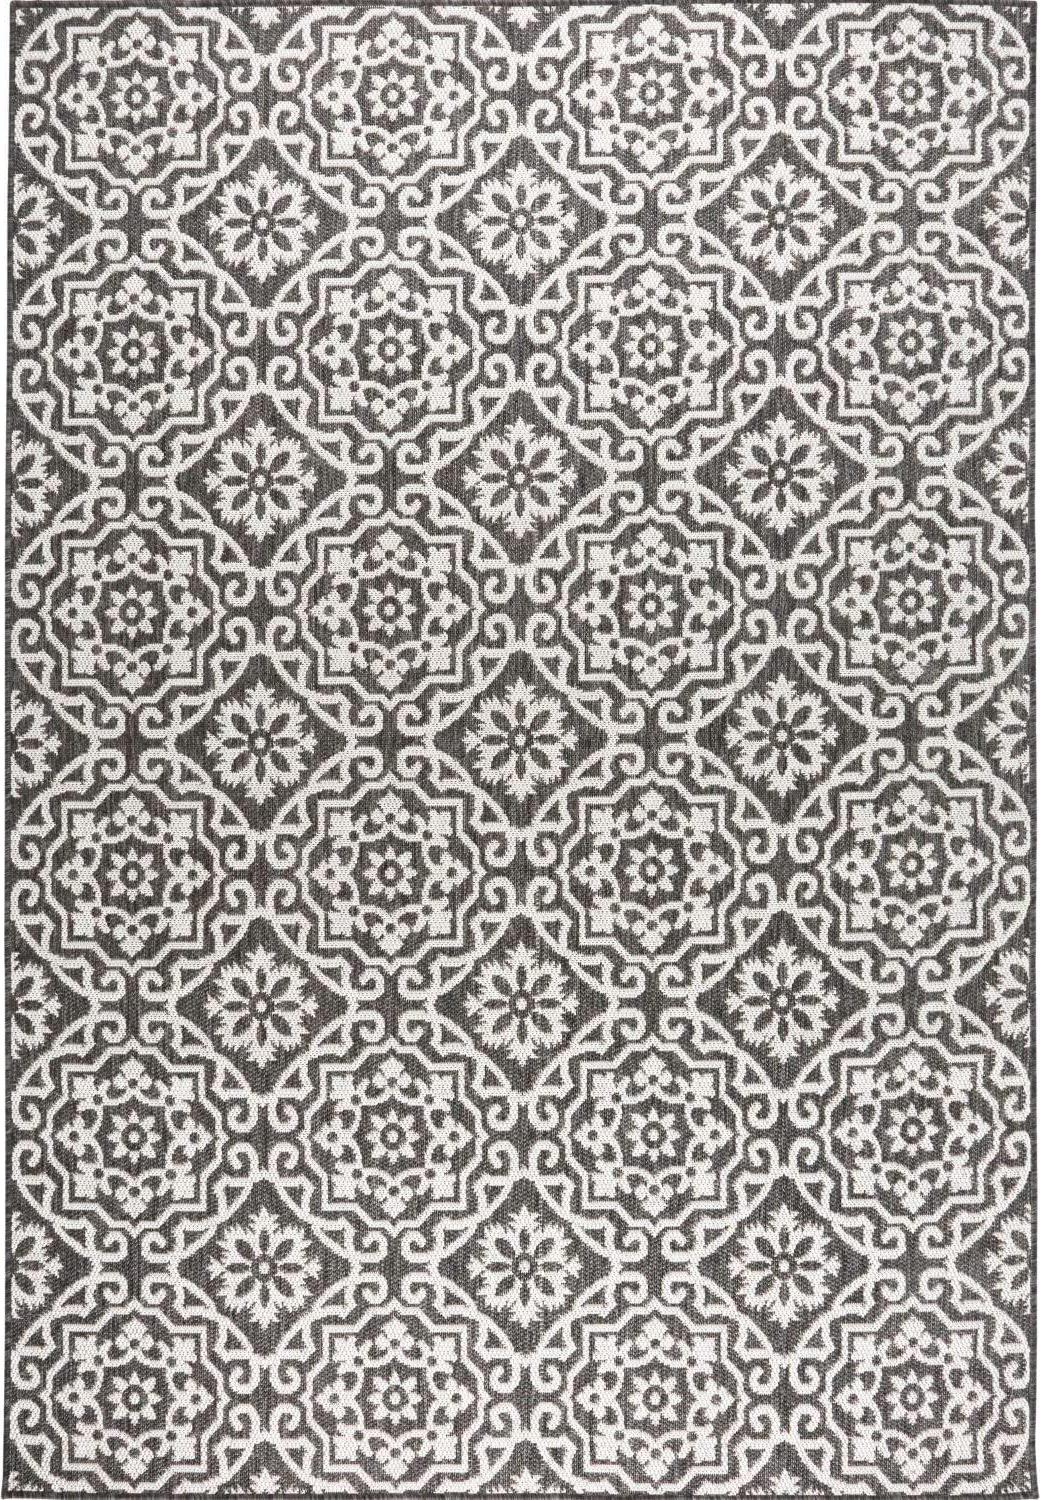 New York Patio Country Danica Transitional Geometric Indoor/Outdoor Area Rug, Black/Grey, 1'x2'11